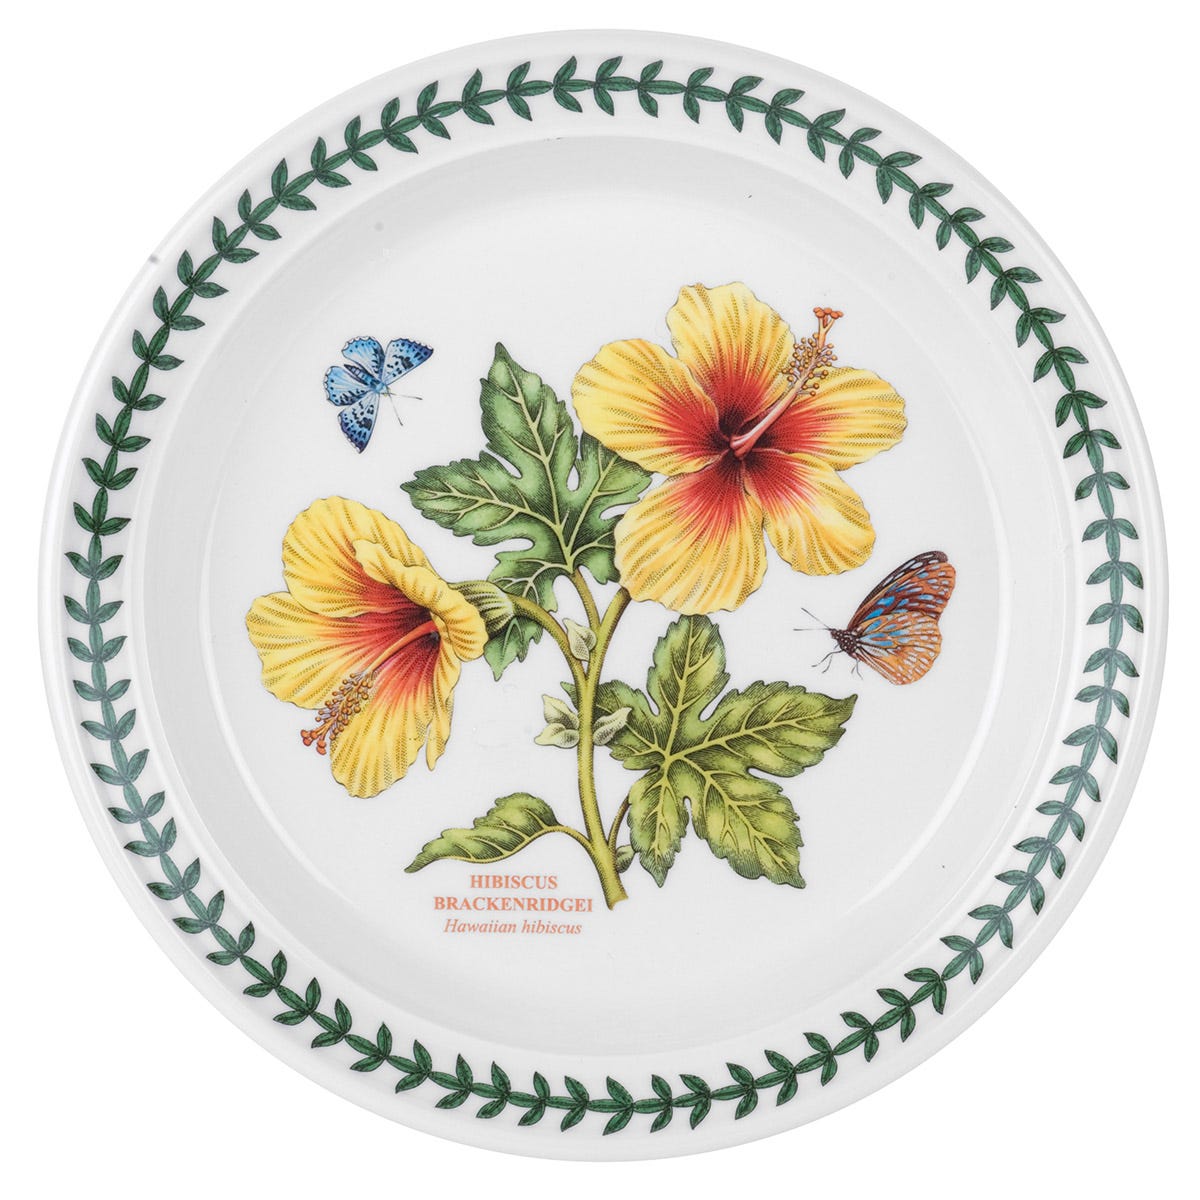 Exotic Botanic Garden Plate Set, 20cm